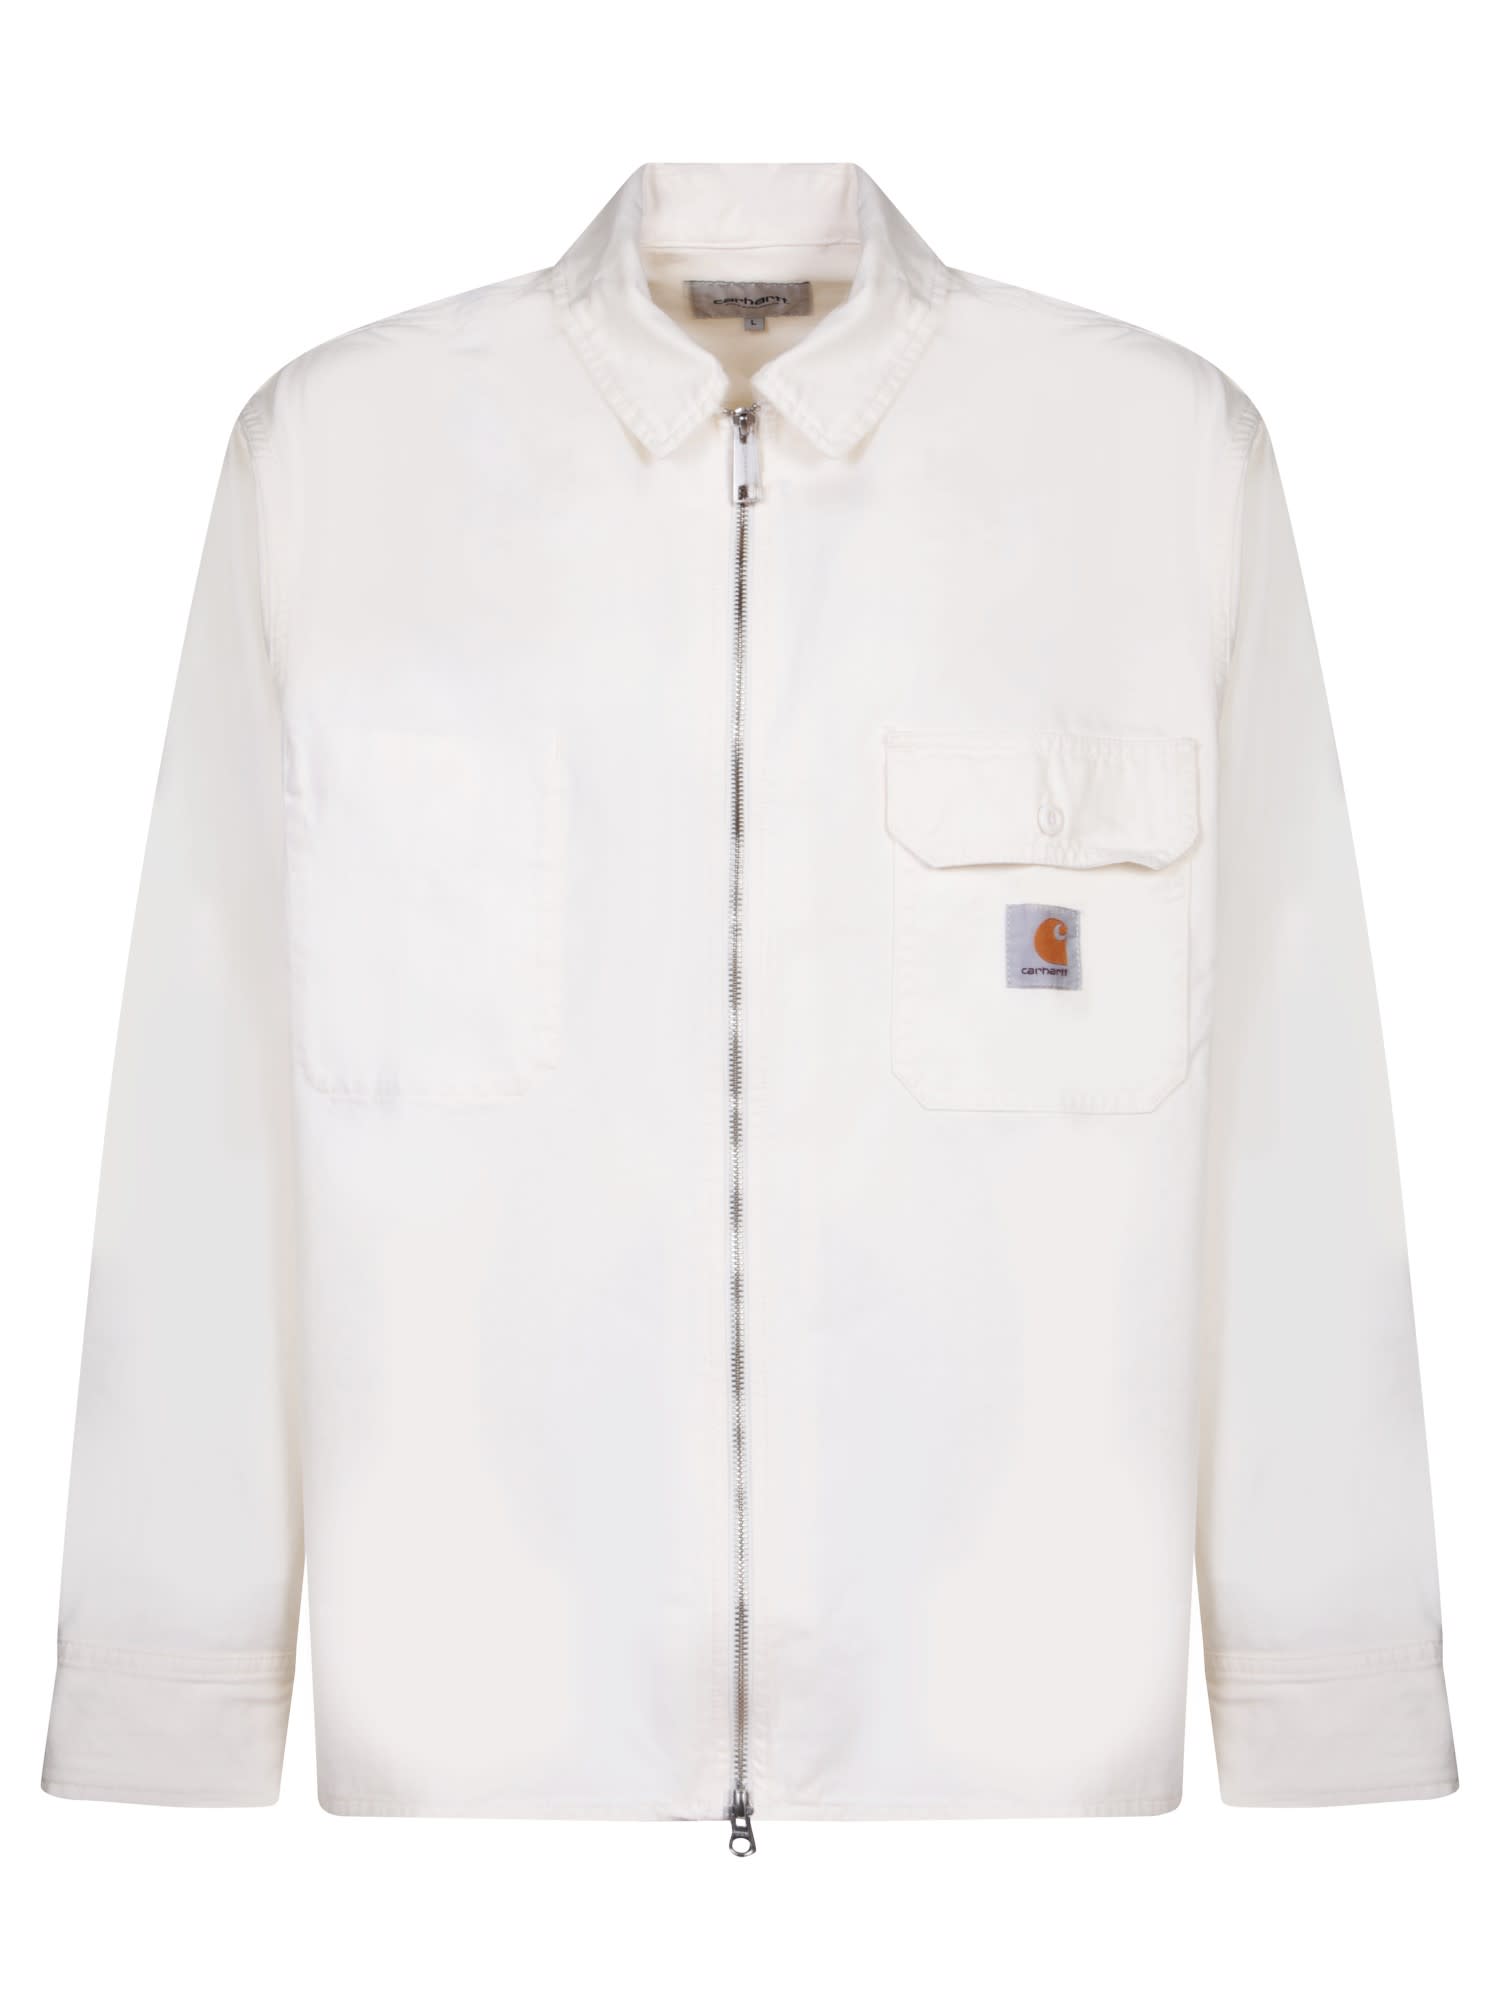 Shop Carhartt Rainer White Shirt